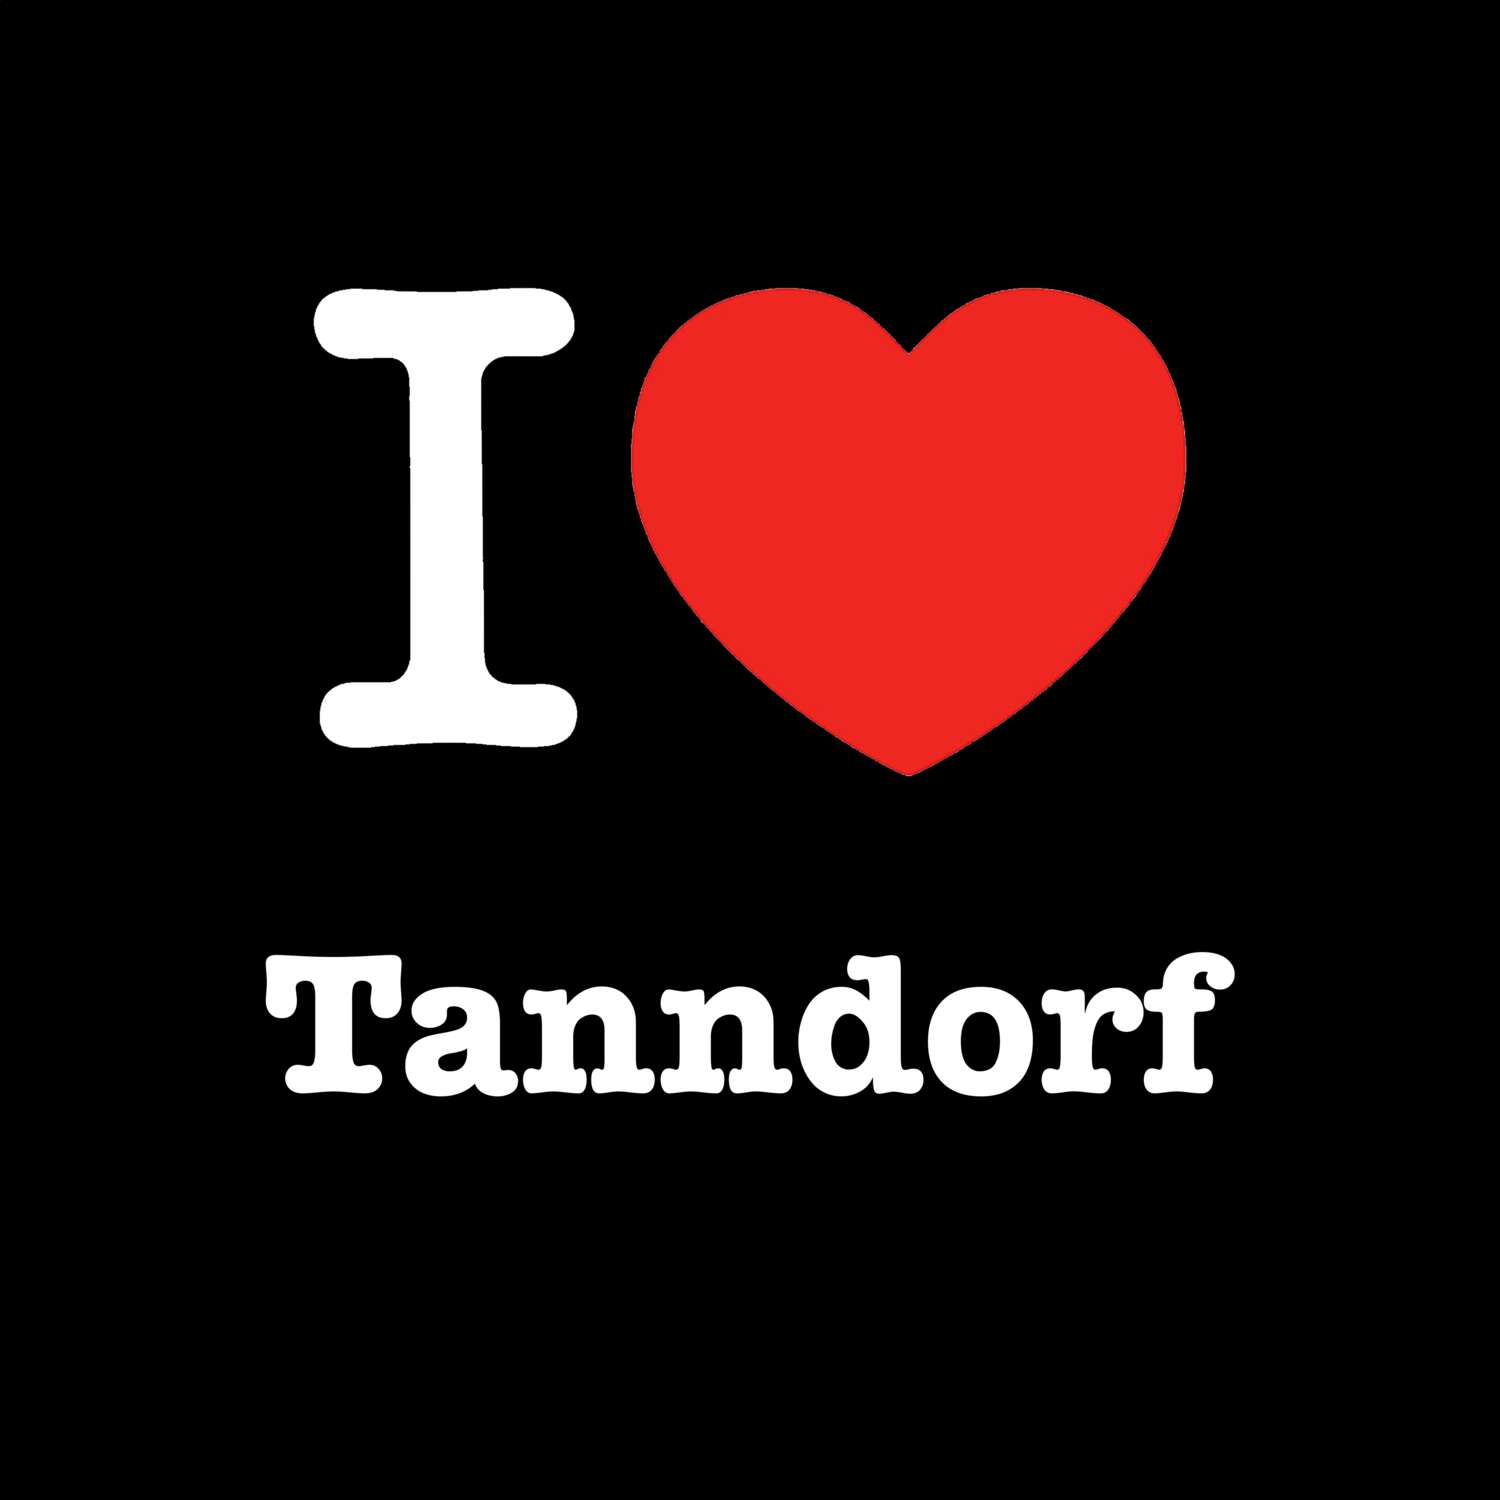 Tanndorf T-Shirt »I love«